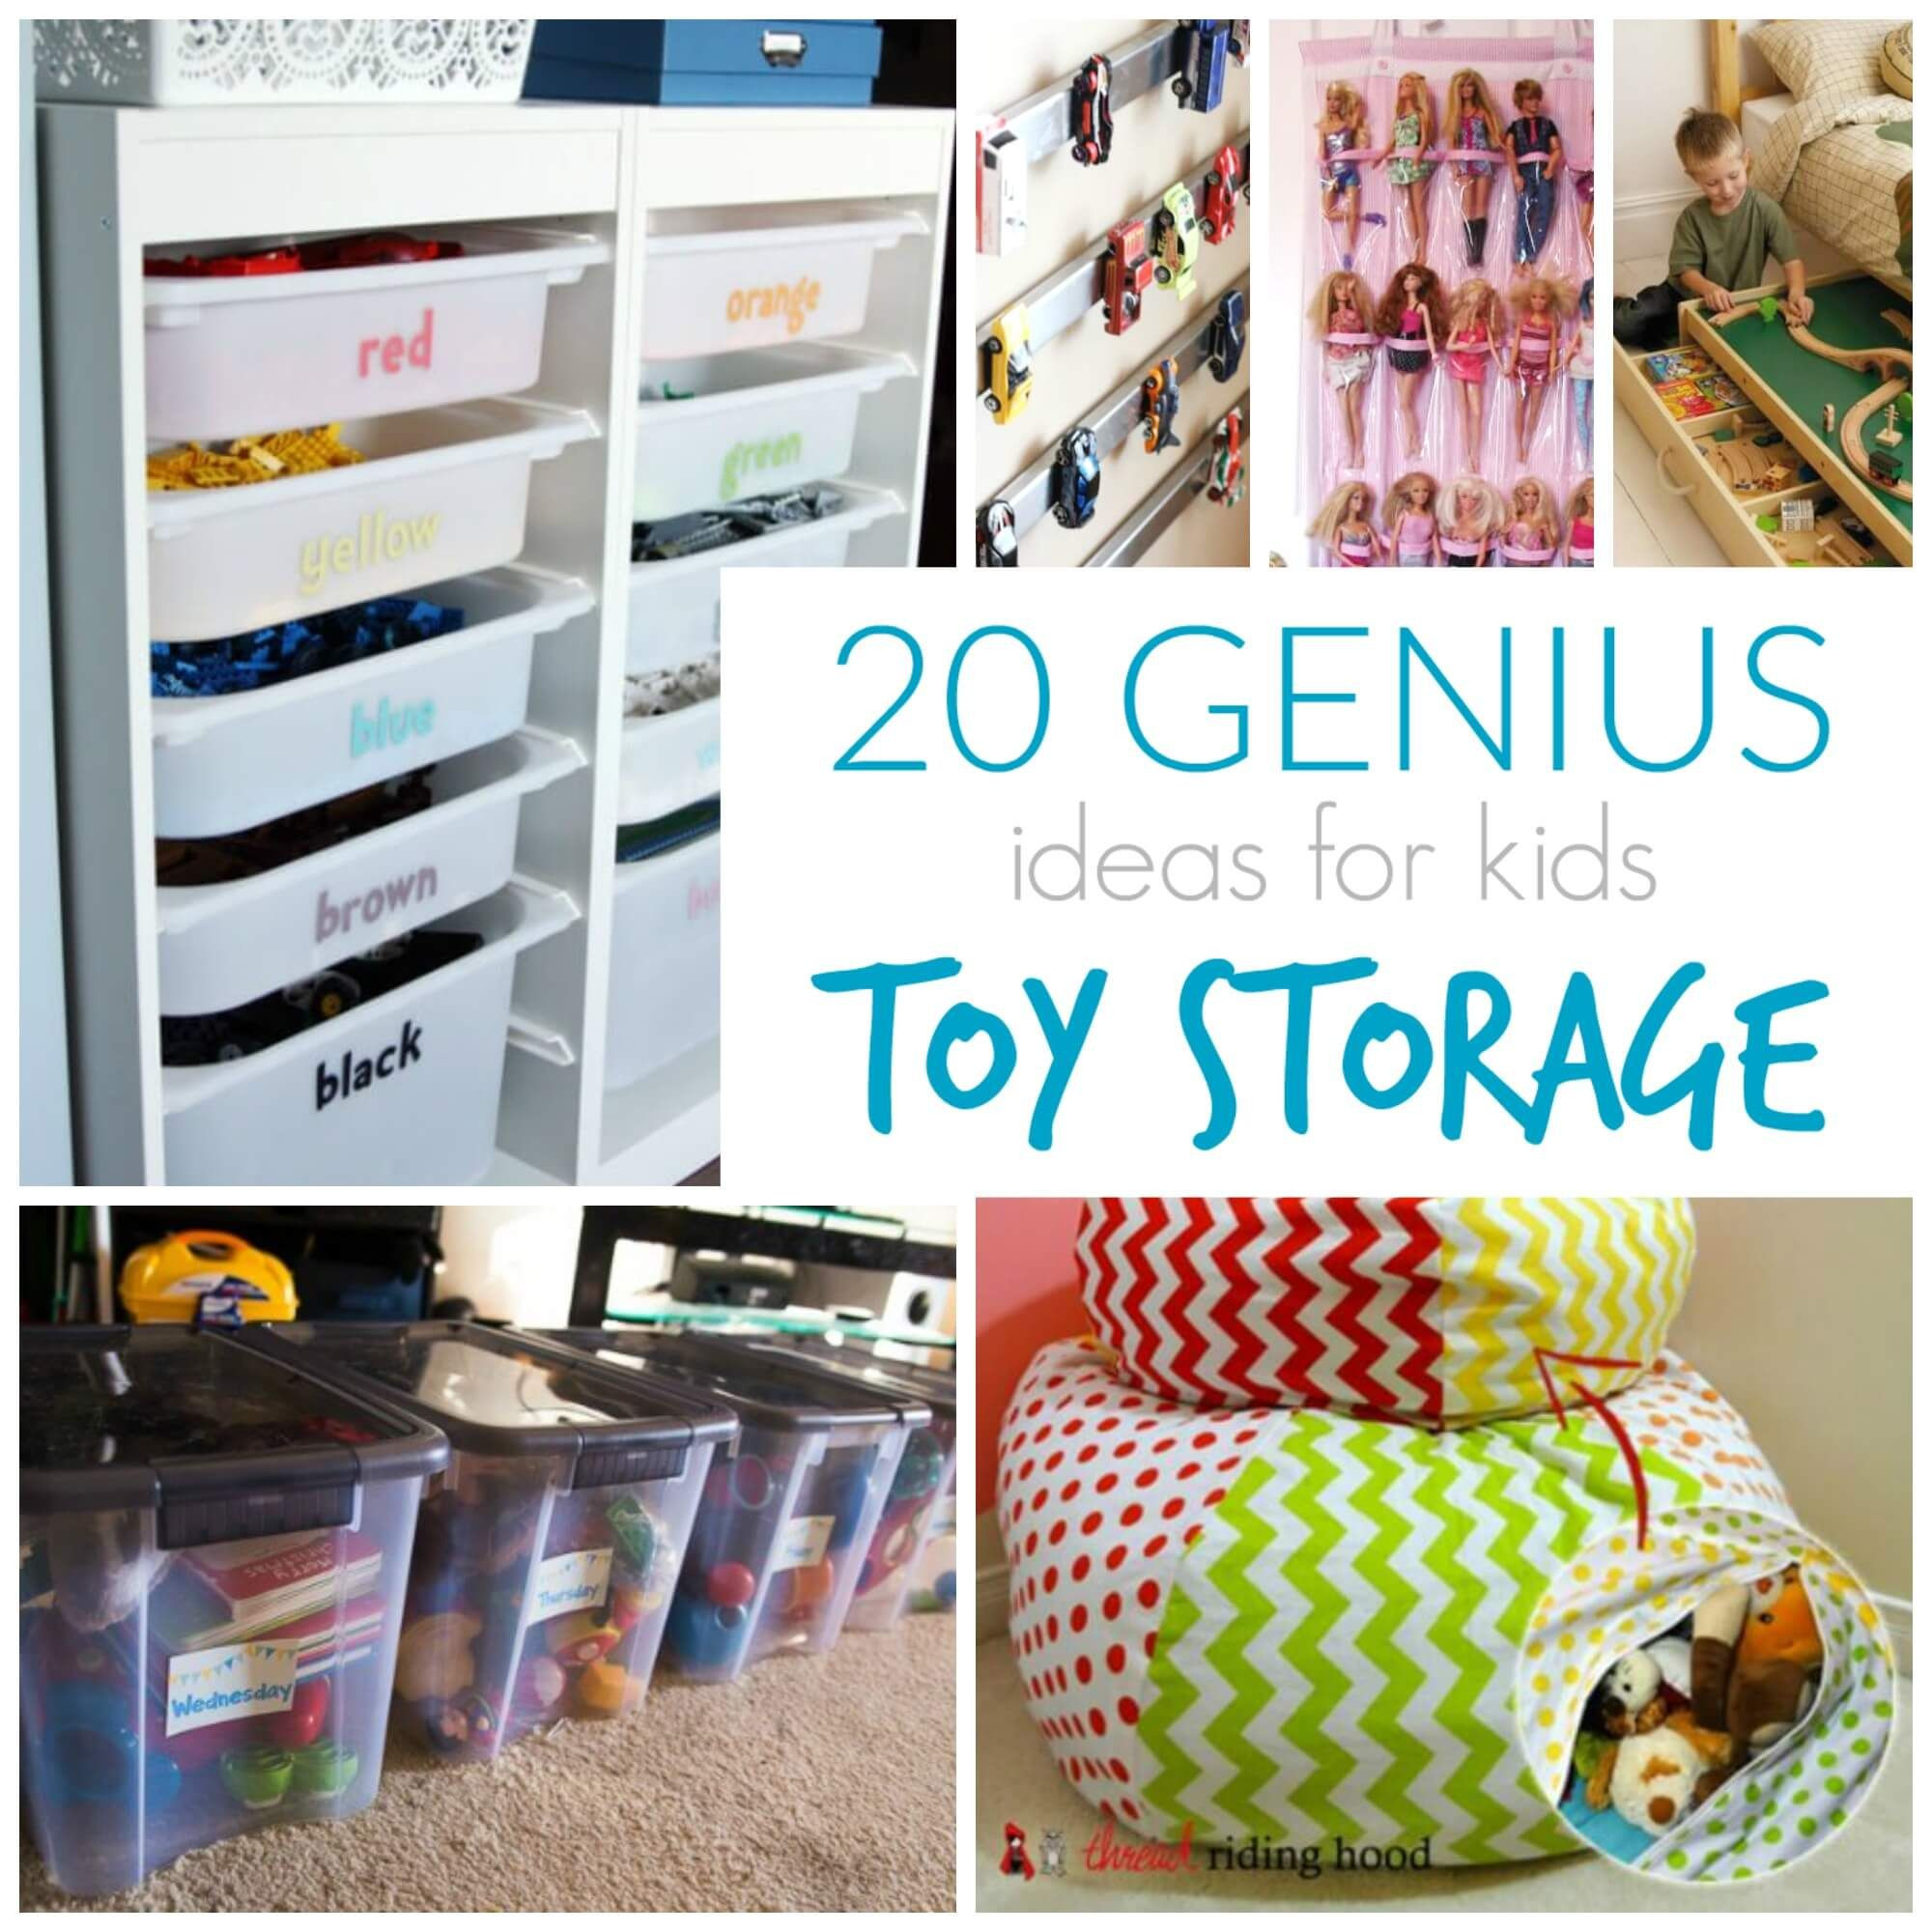 DIY Kids Toy Storage
 7 1 Toy Storage Ideas 2019 DIY Plans In A Small Space